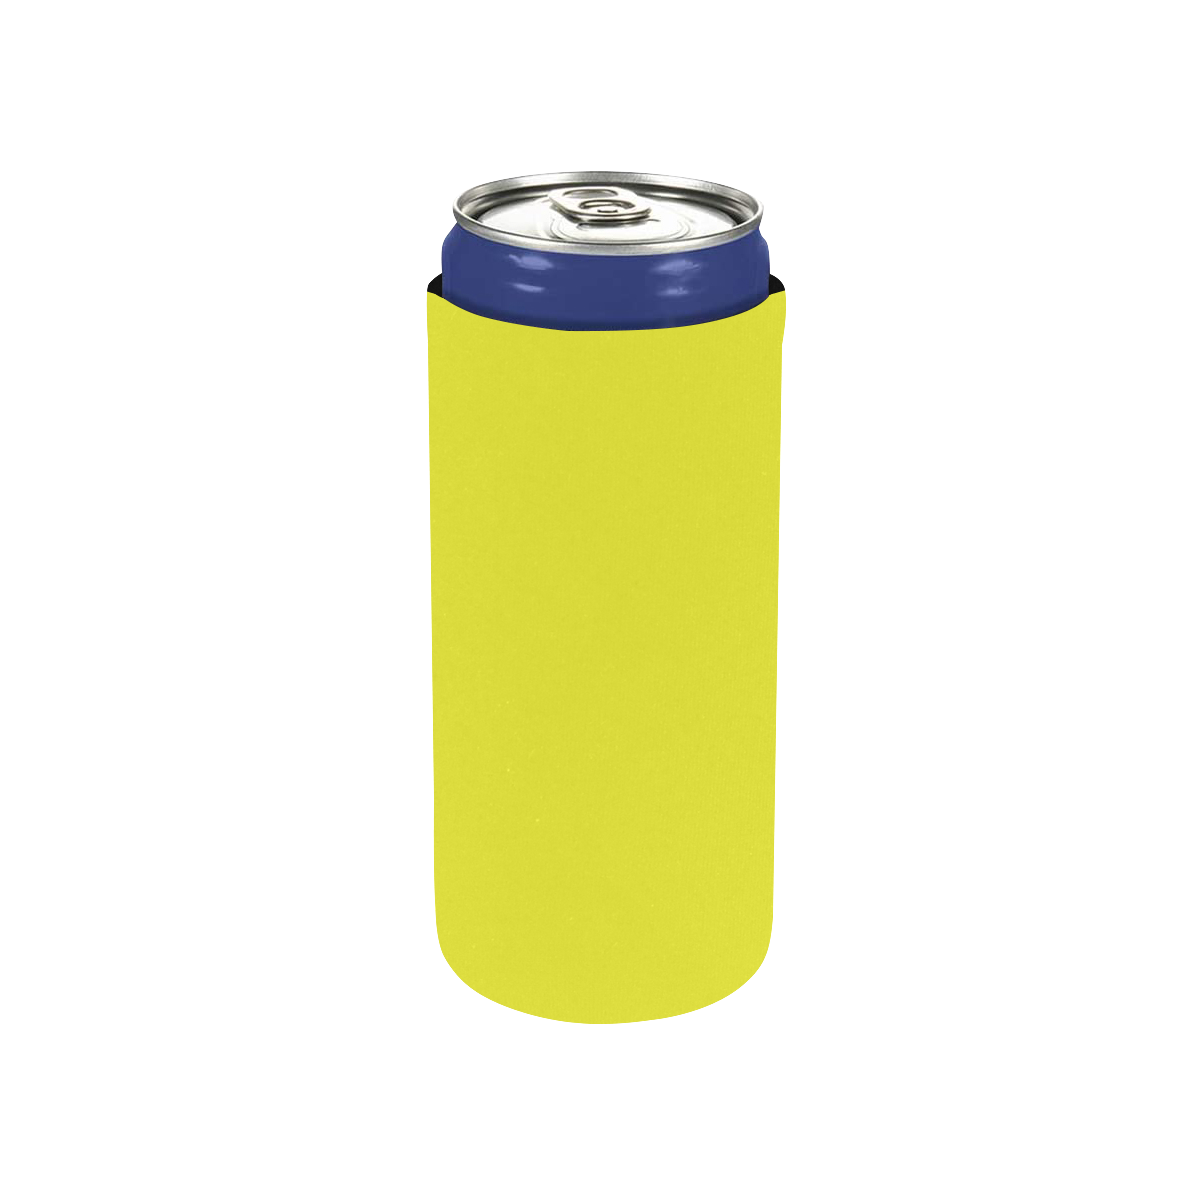 color maximum yellow Neoprene Can Cooler 5" x 2.3" dia.